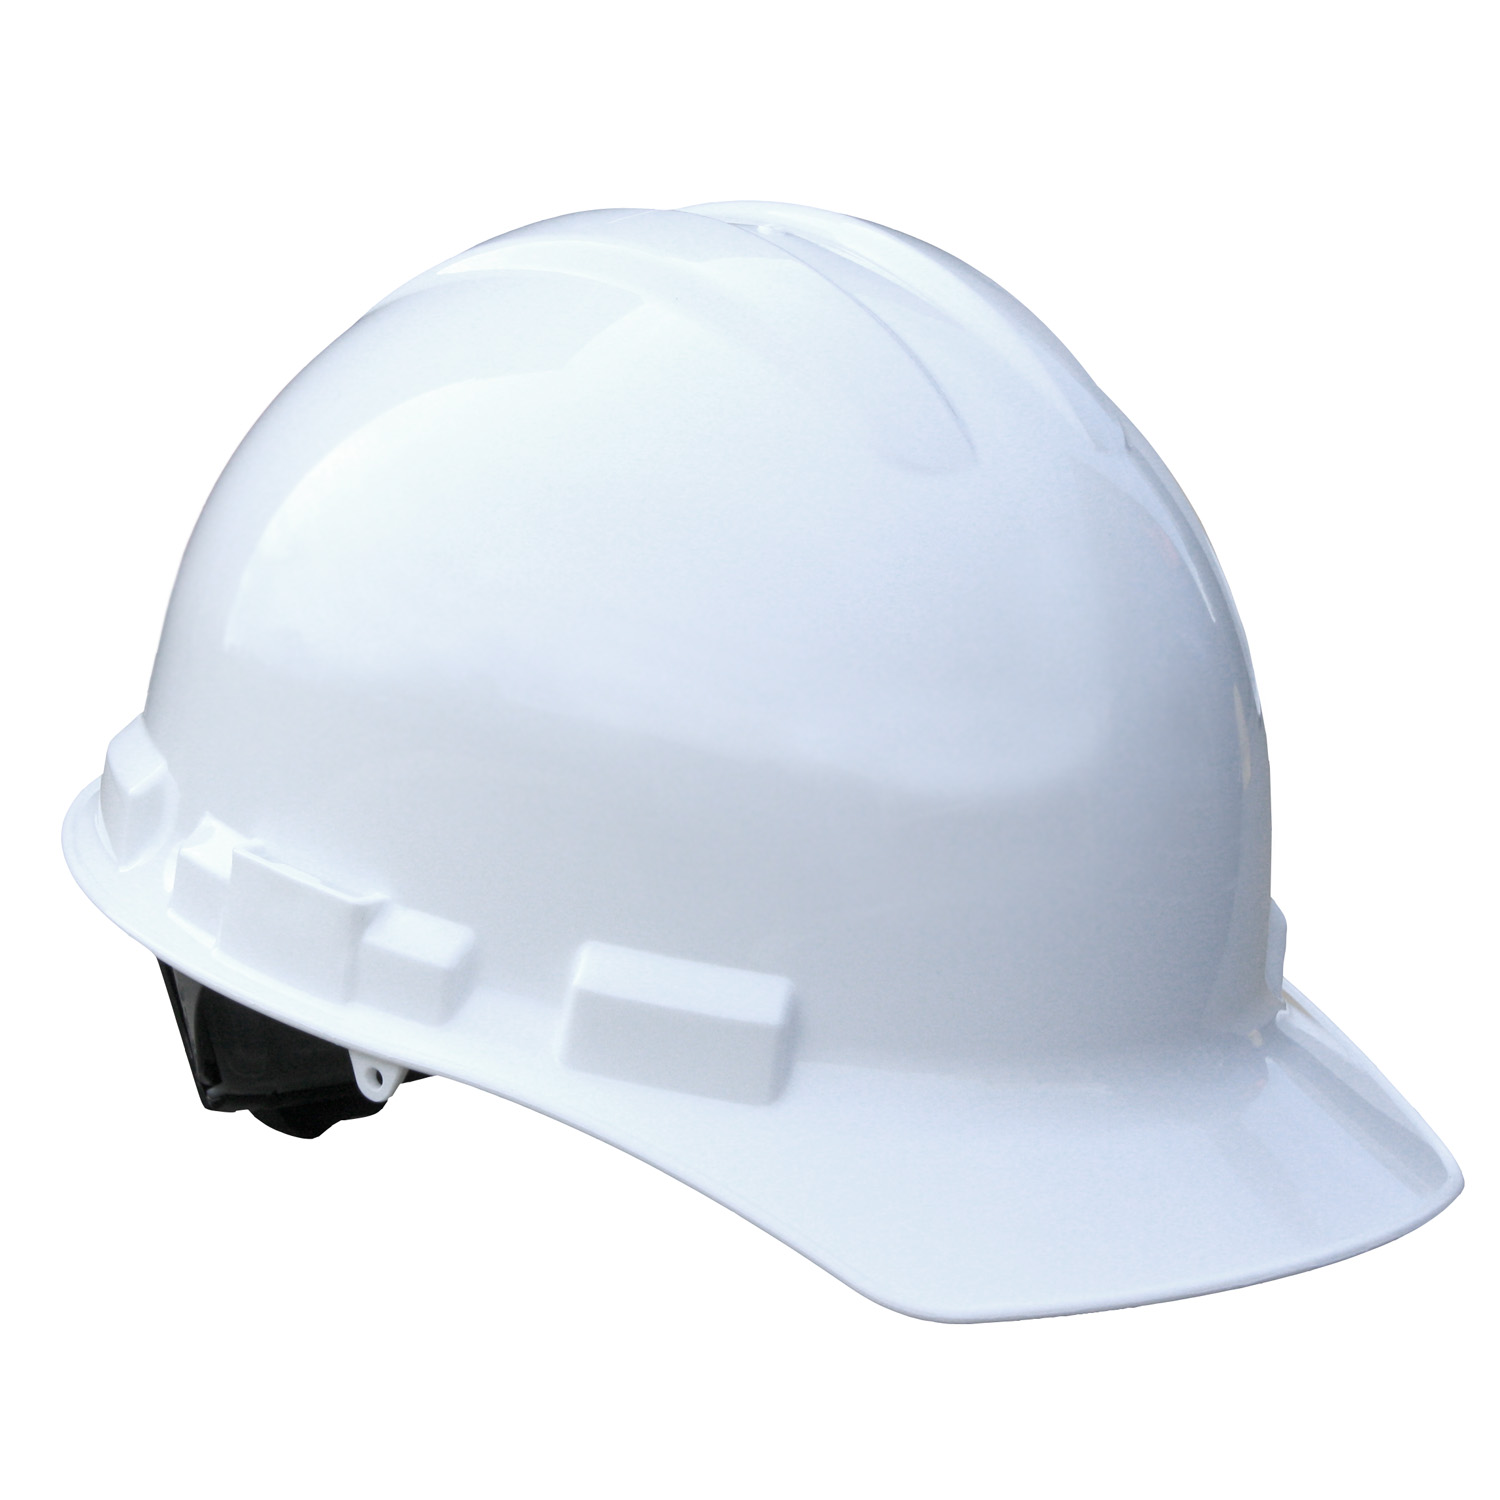 Granite™ Cap Style 6 Point Pinlock Hard Hat - White